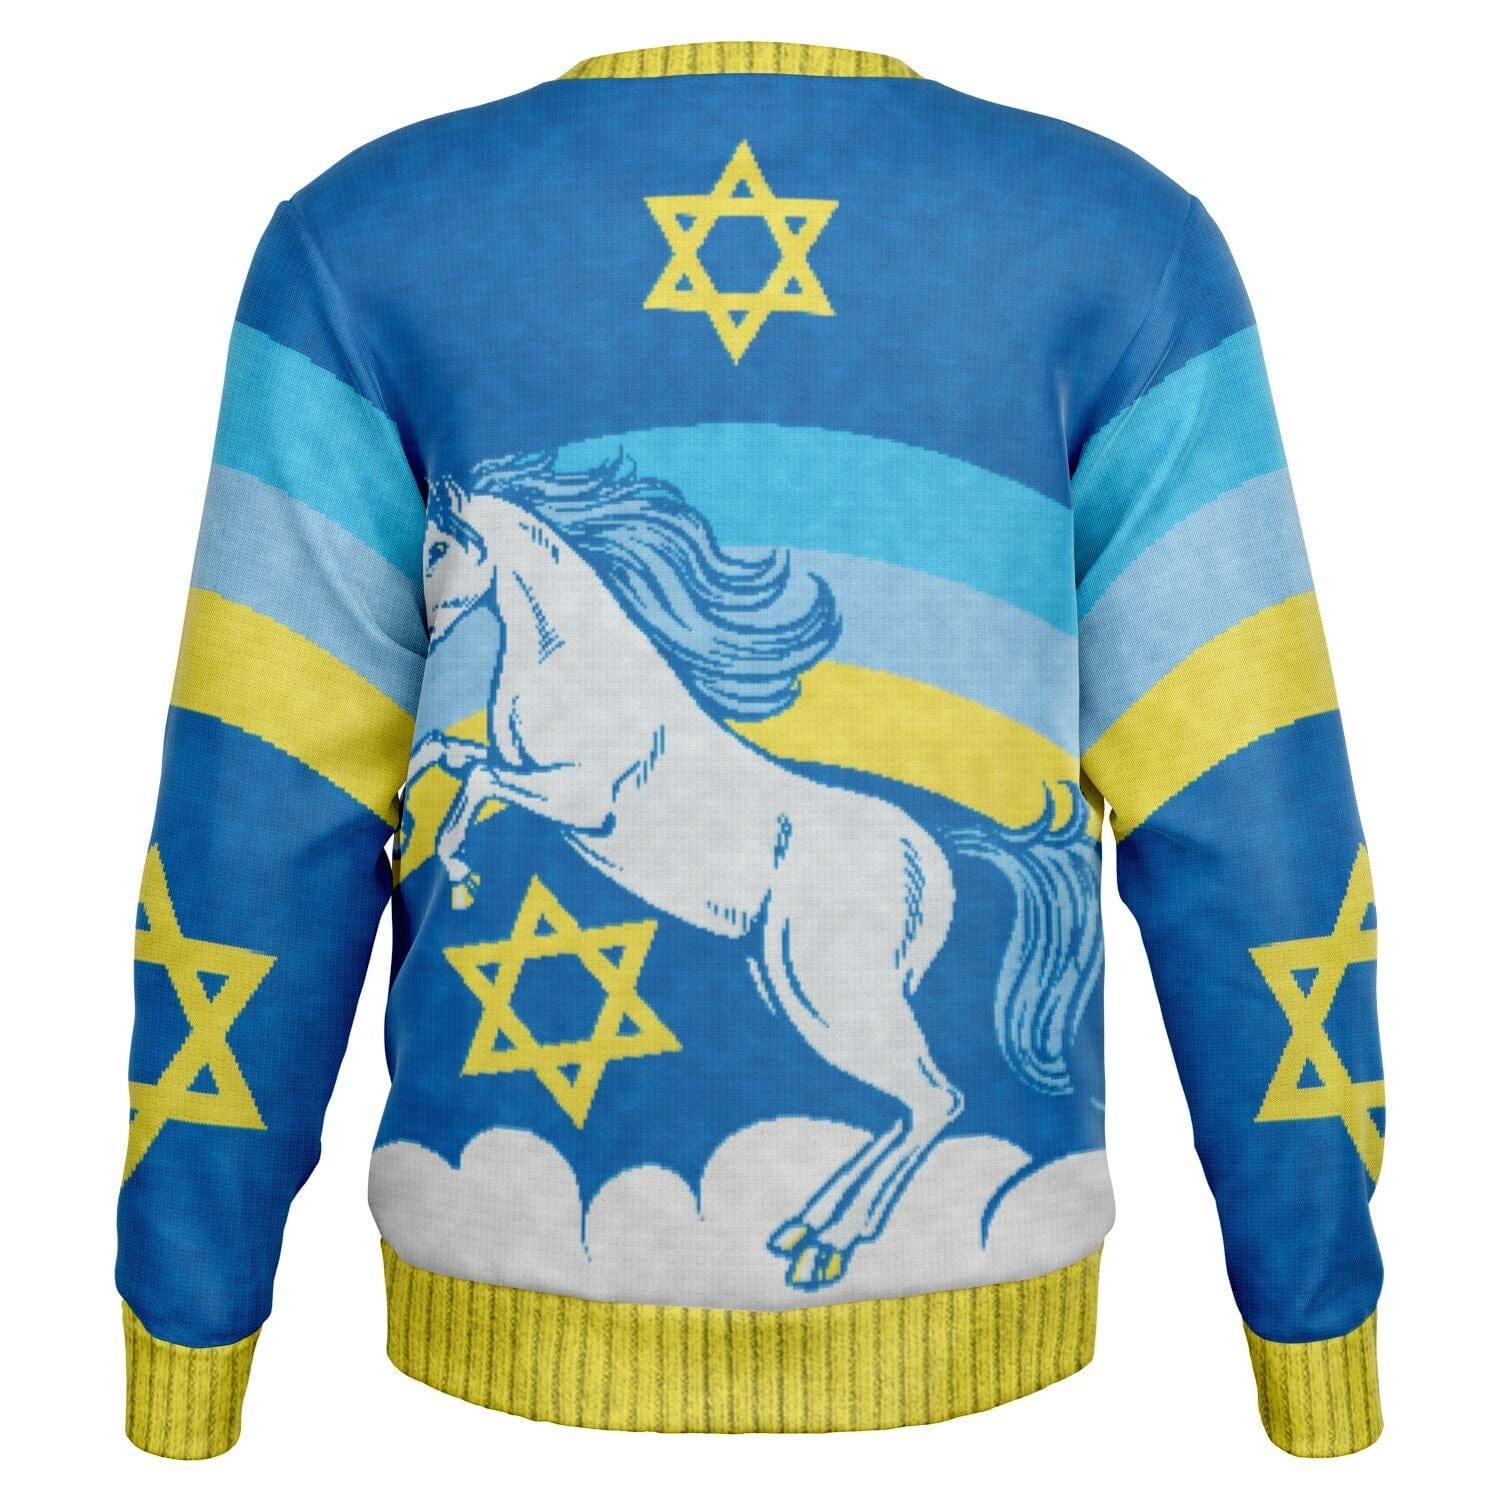 Jewnicorn Unisex Ugly Passover Sweater - TopKoalaTee